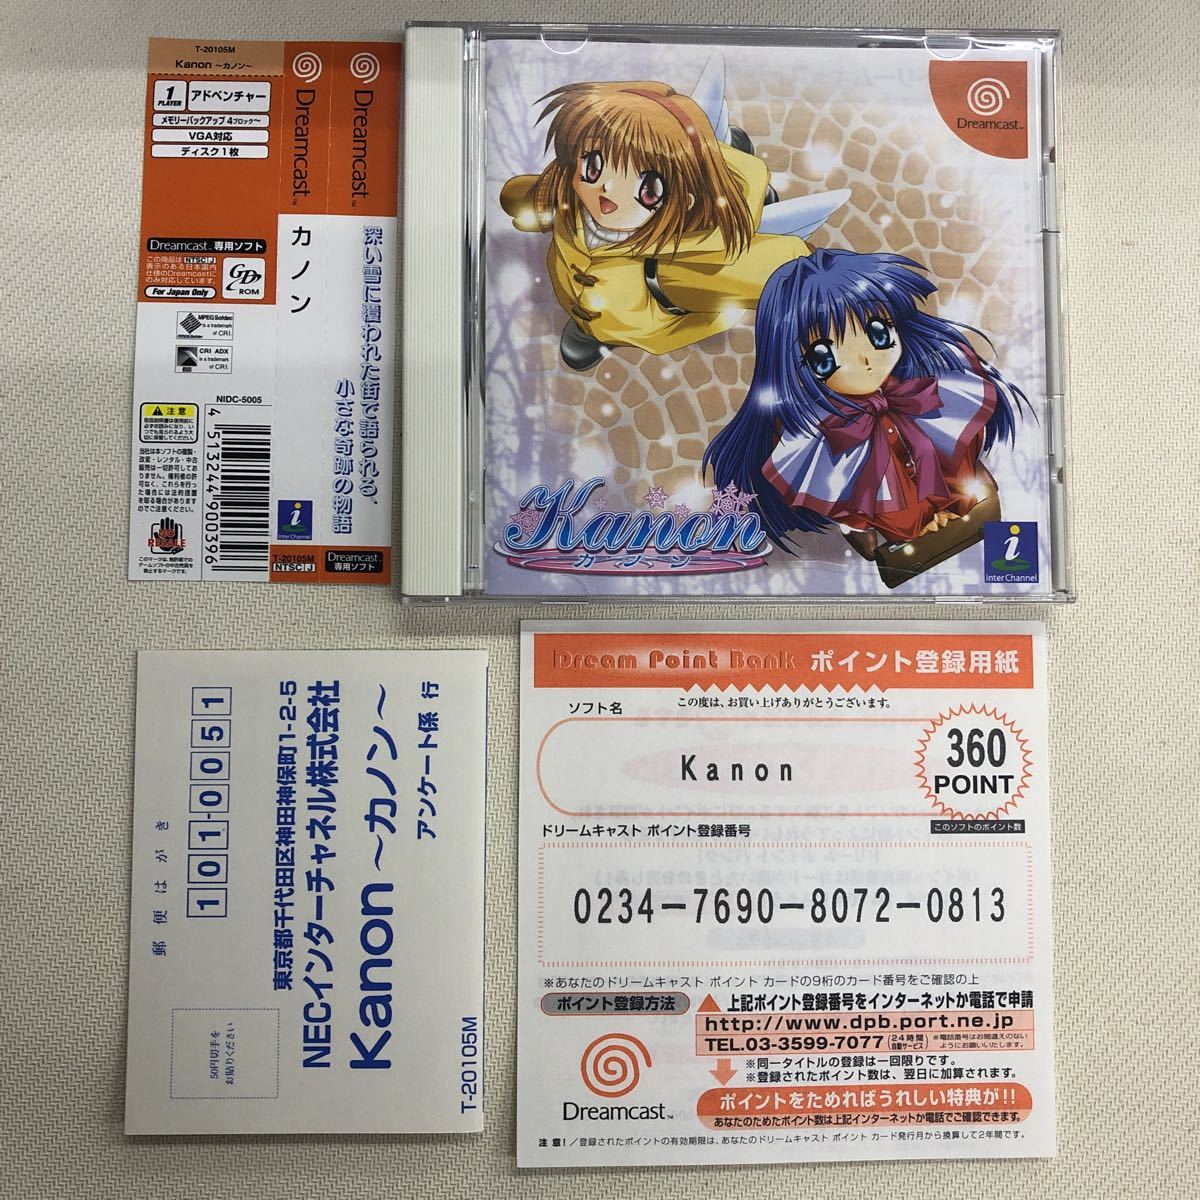  Dreamcast ka non kanon beautiful goods obi leaf document.